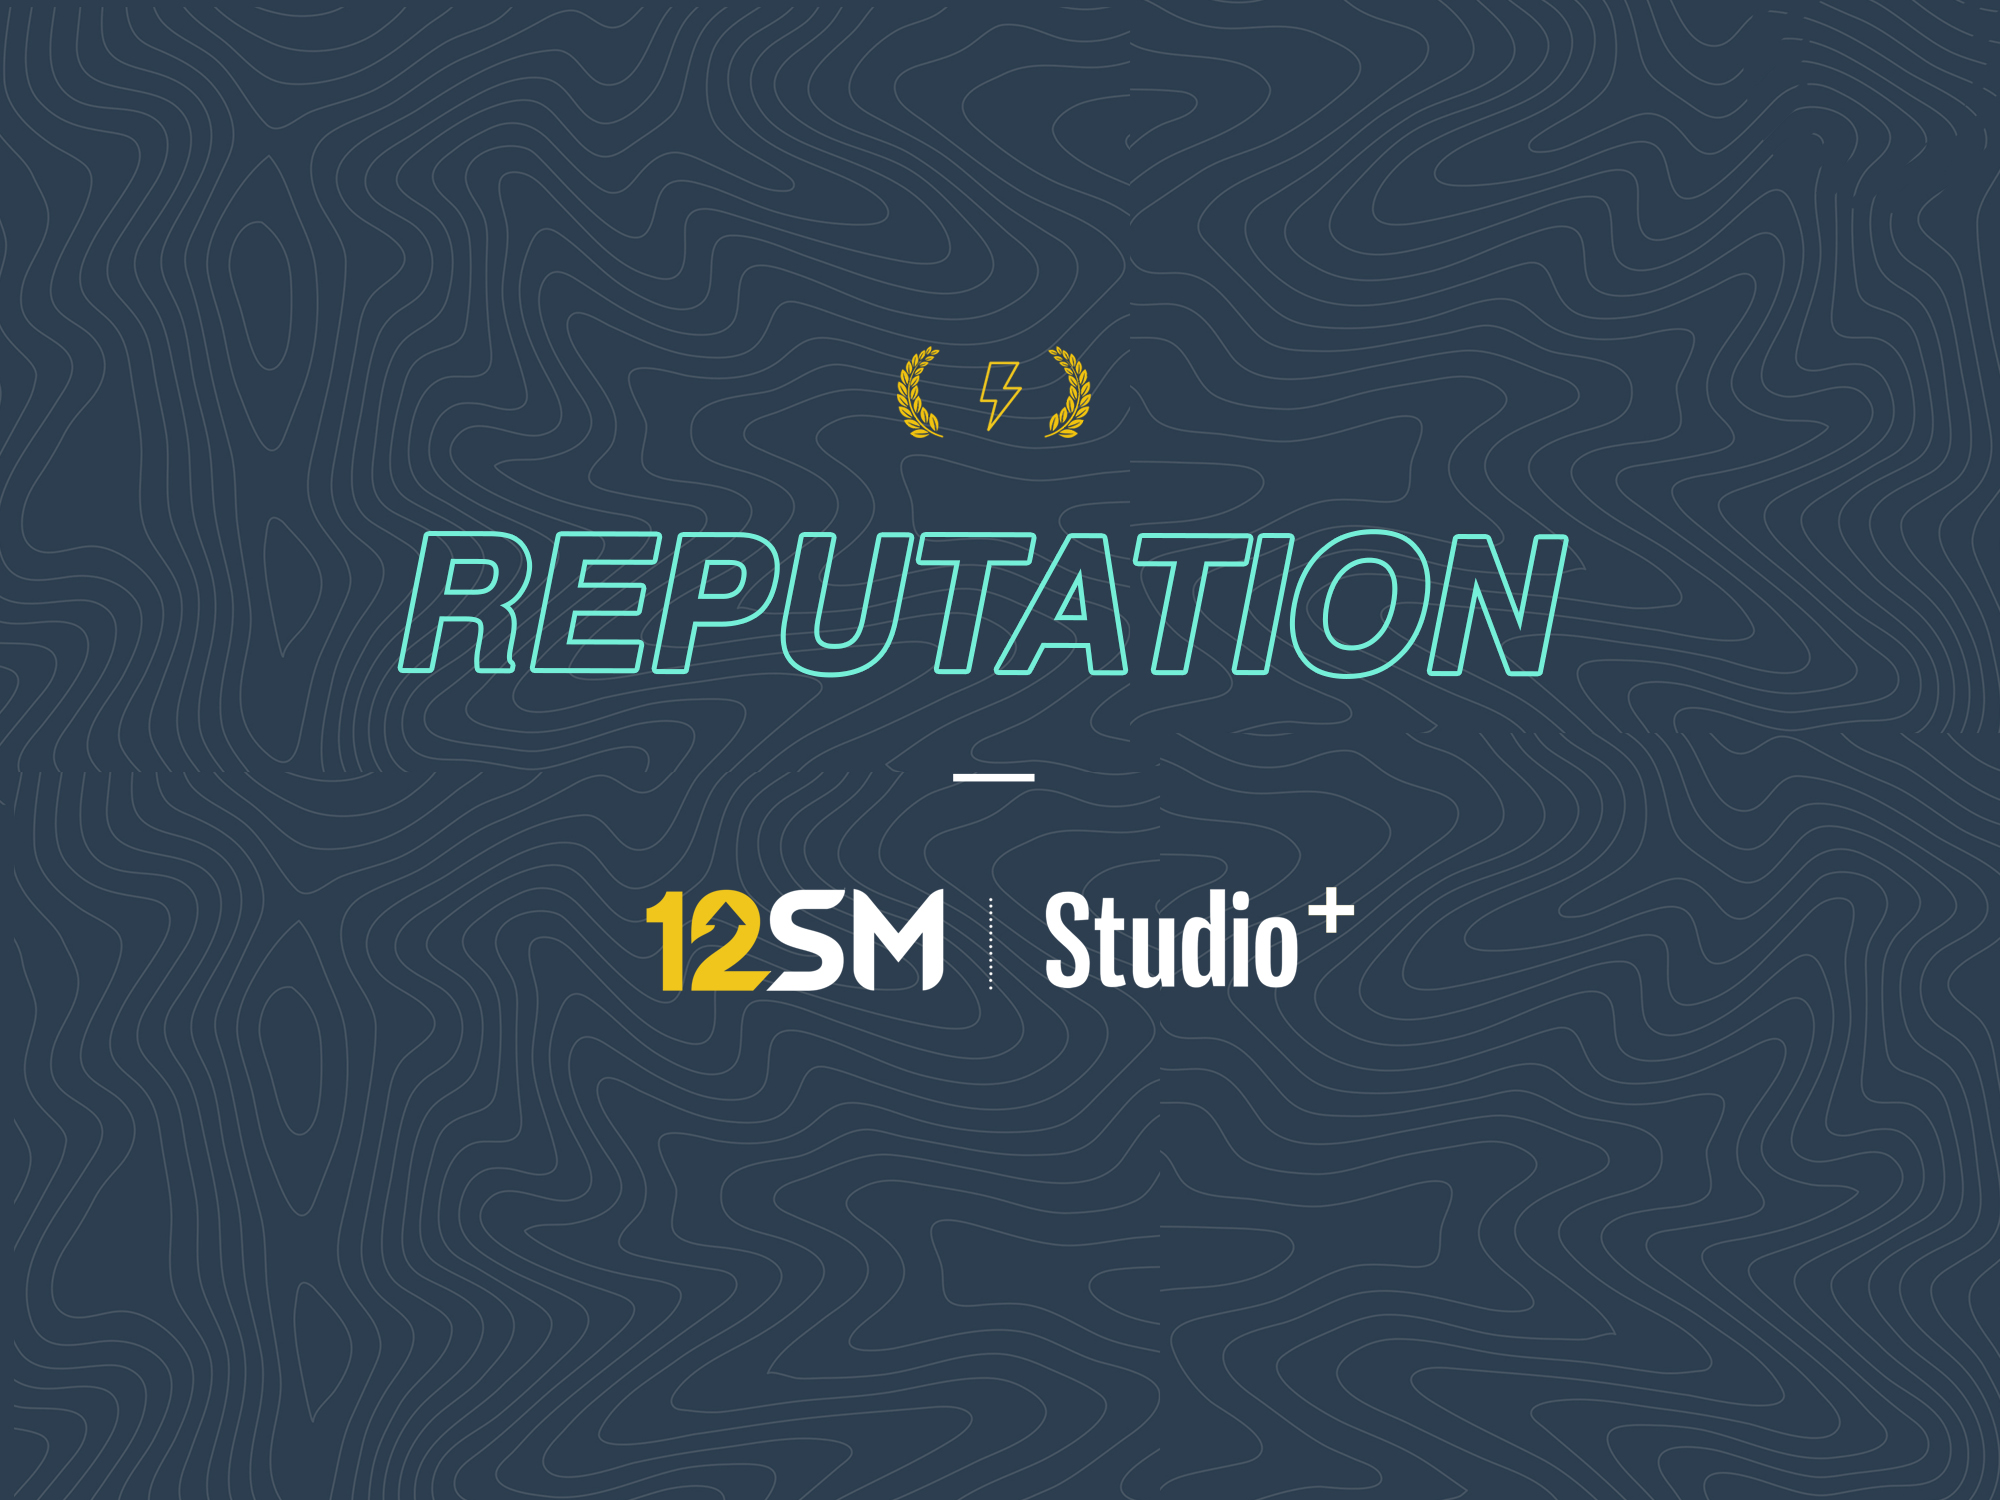 12sm-studio-reputation